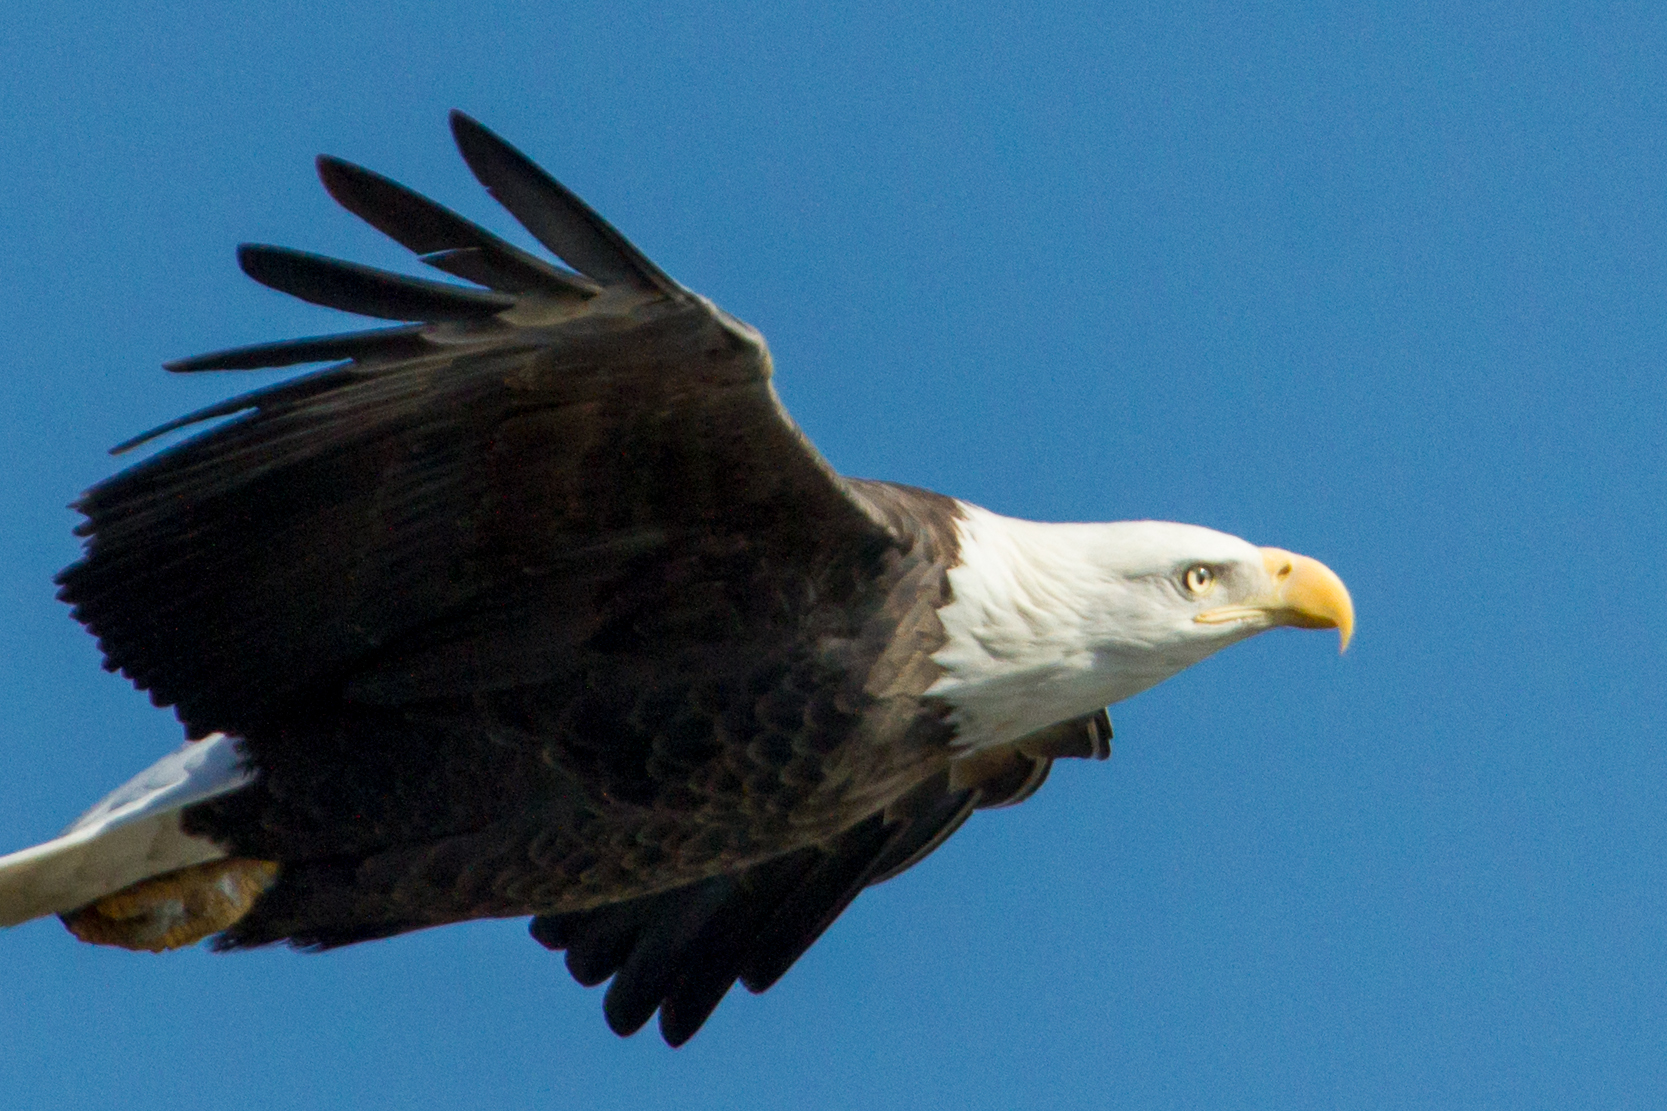 Soaring Eagle | Flickr - Photo Sharing!